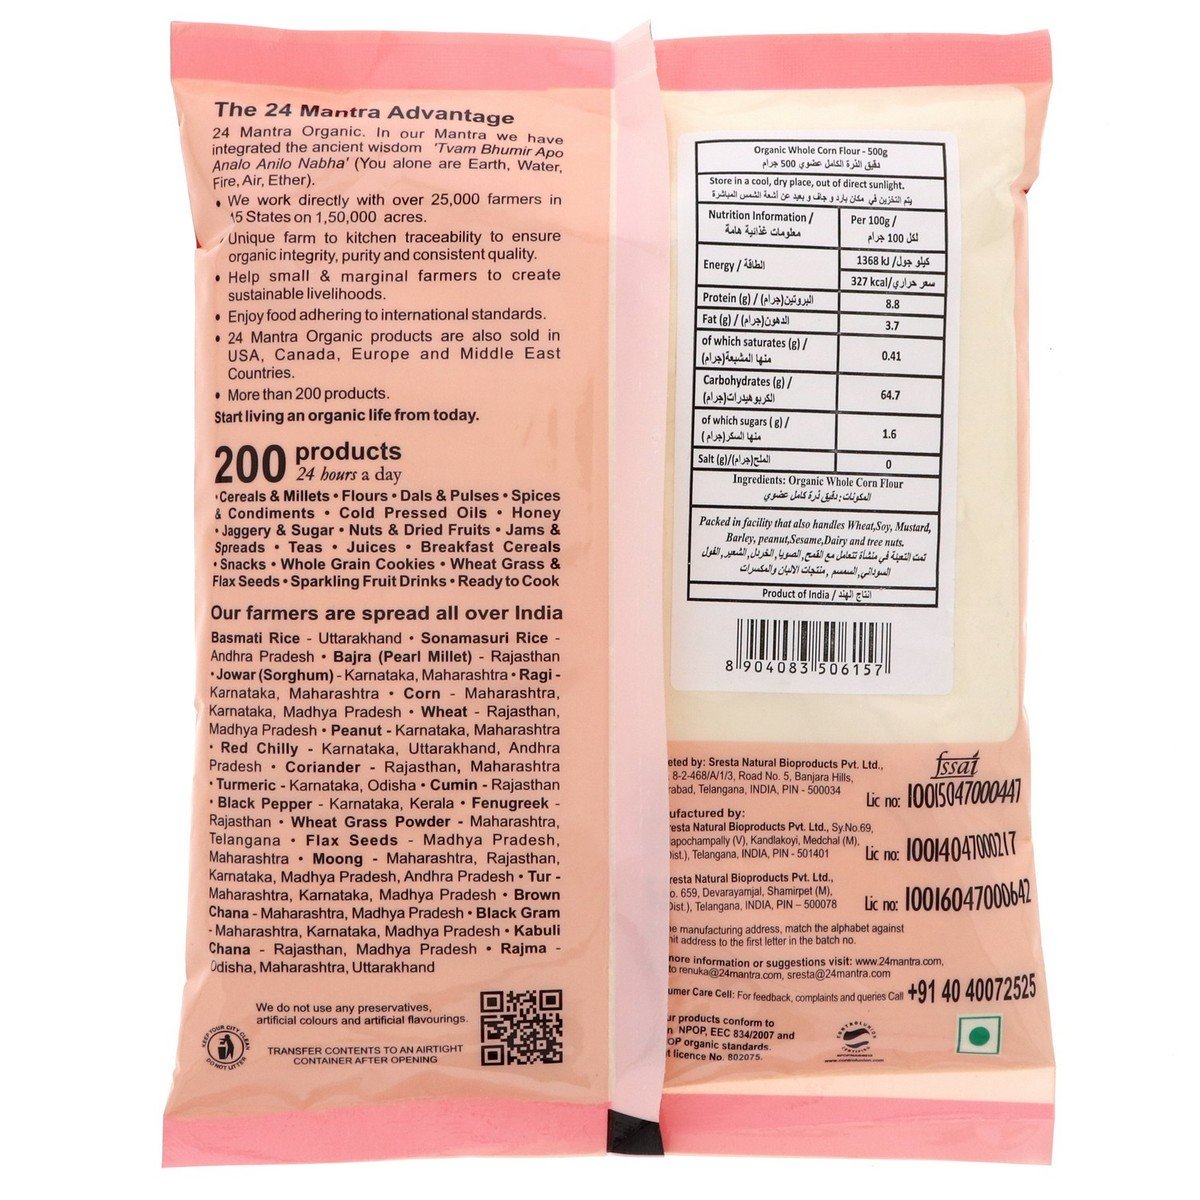 24 Mantra Organic Whole Corn Flour 500 g